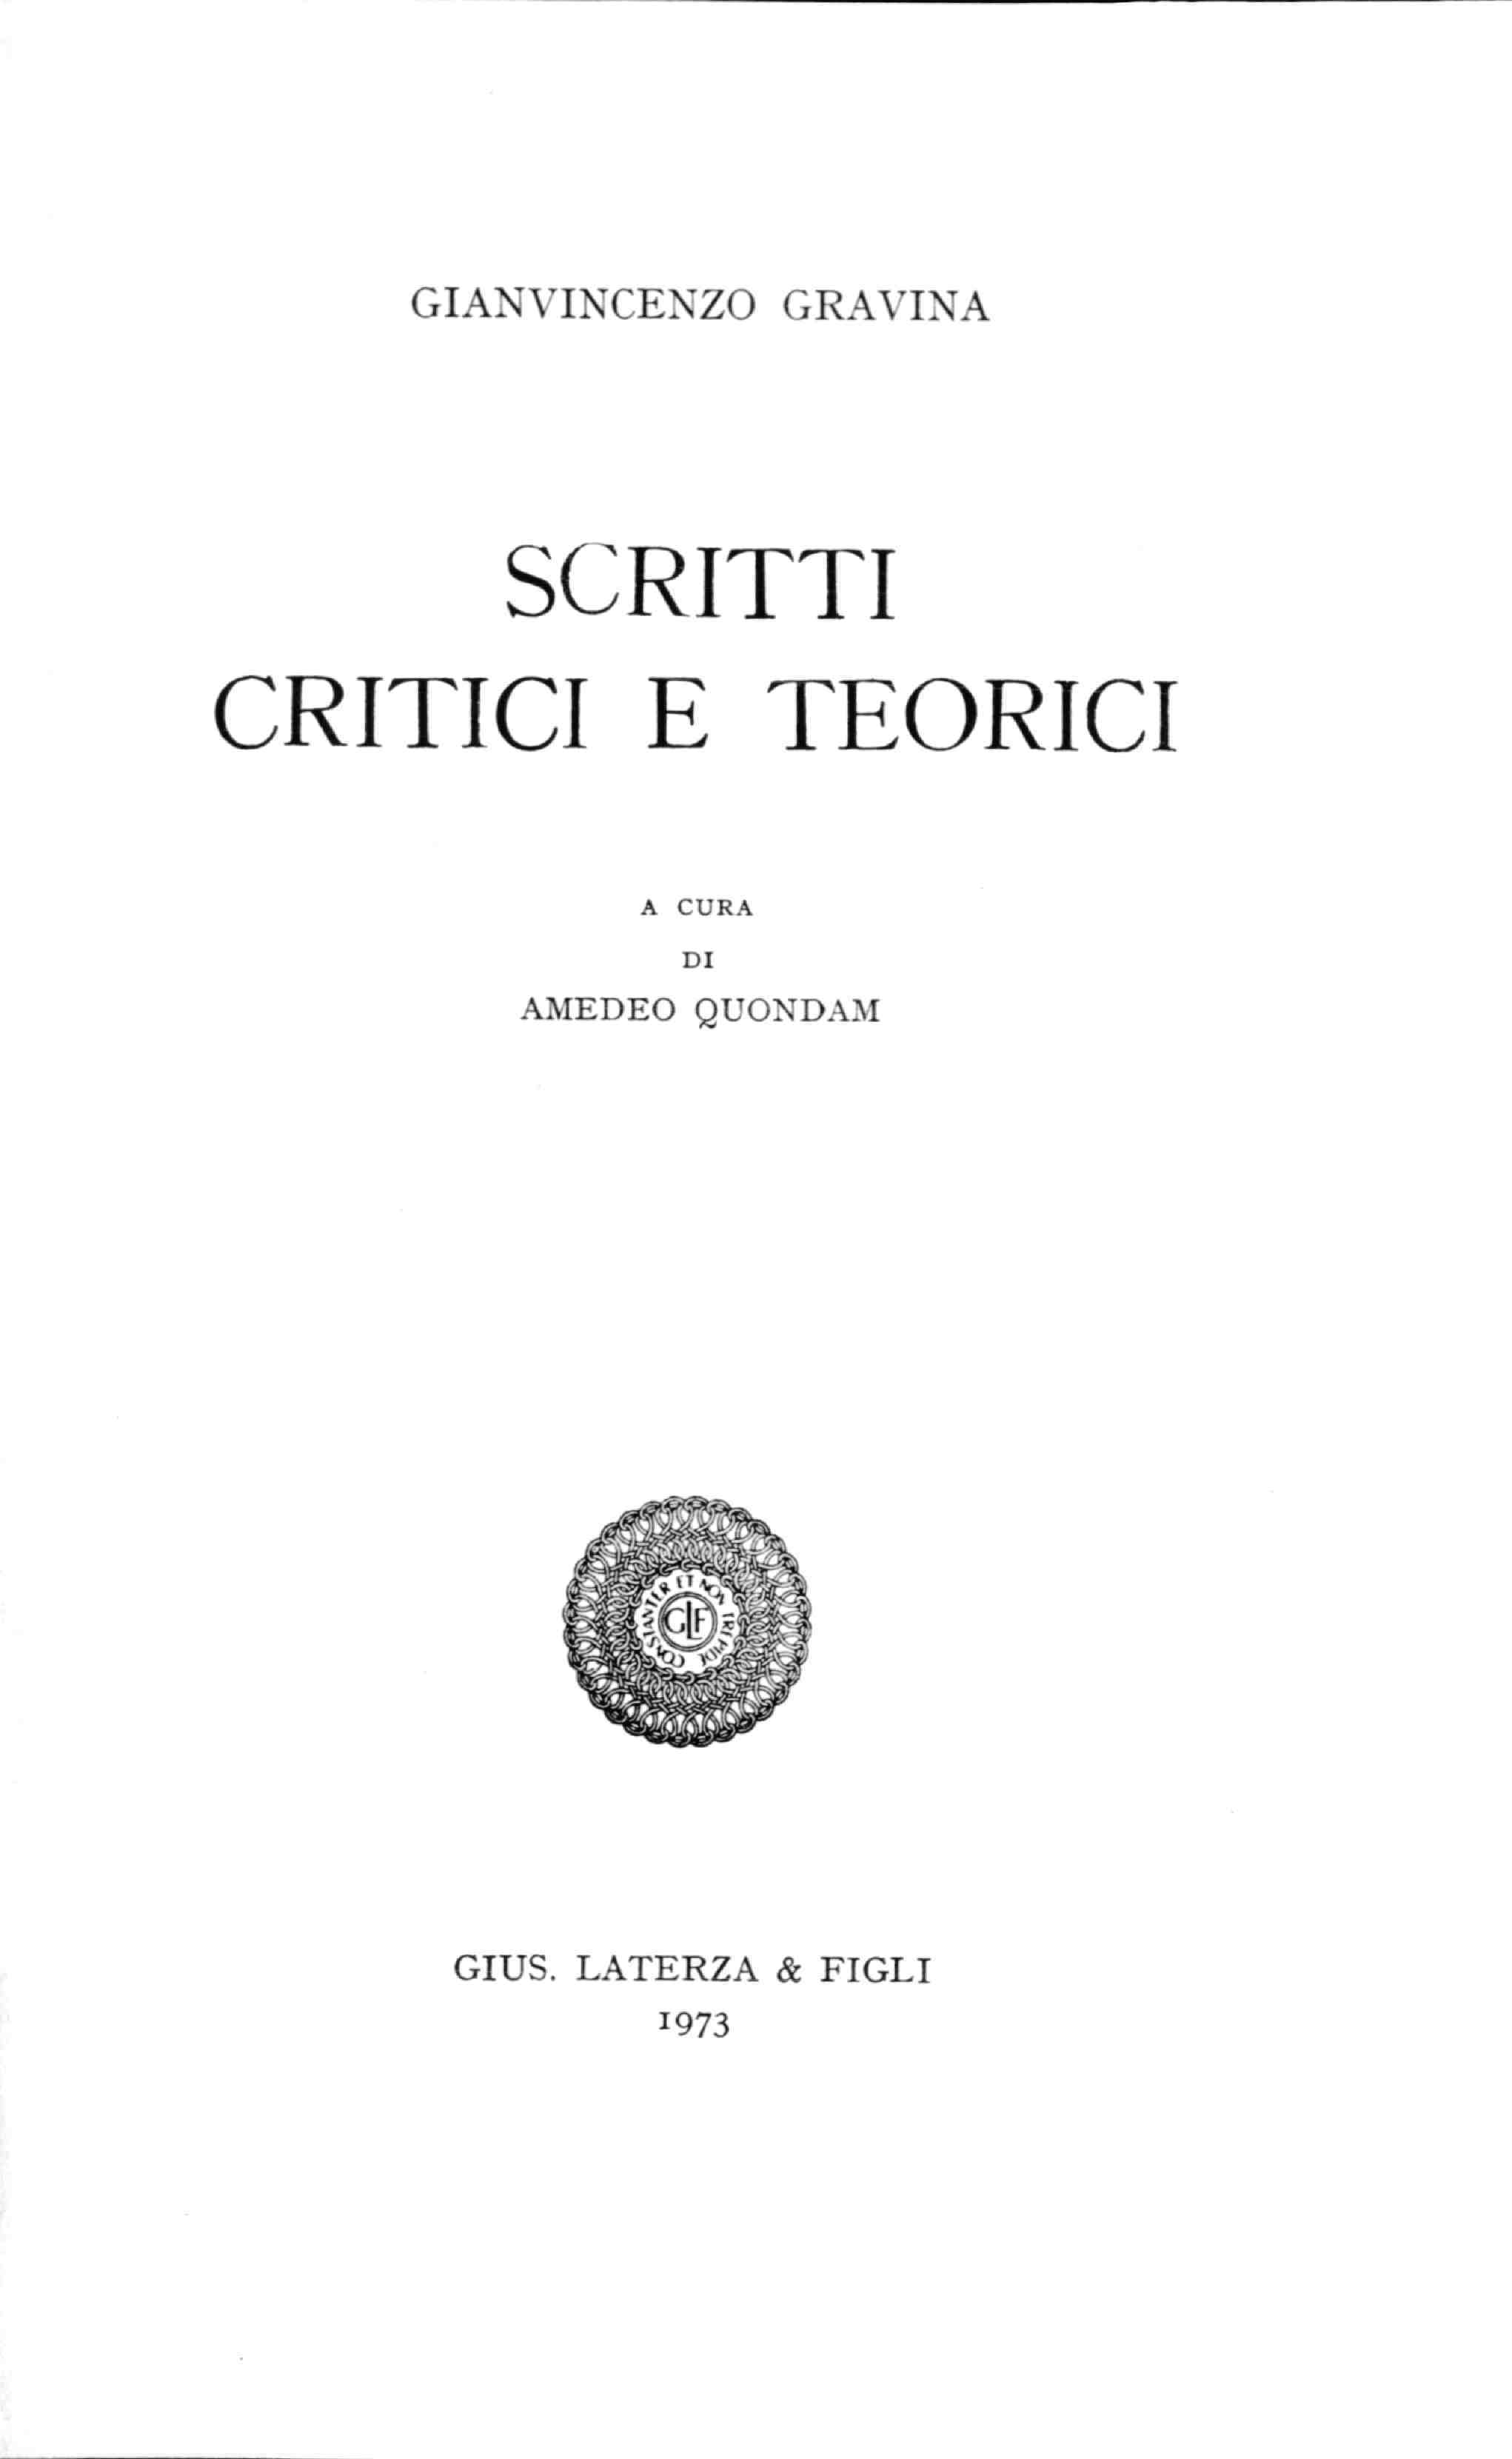 ''Scritti critici e teorici'', 1973